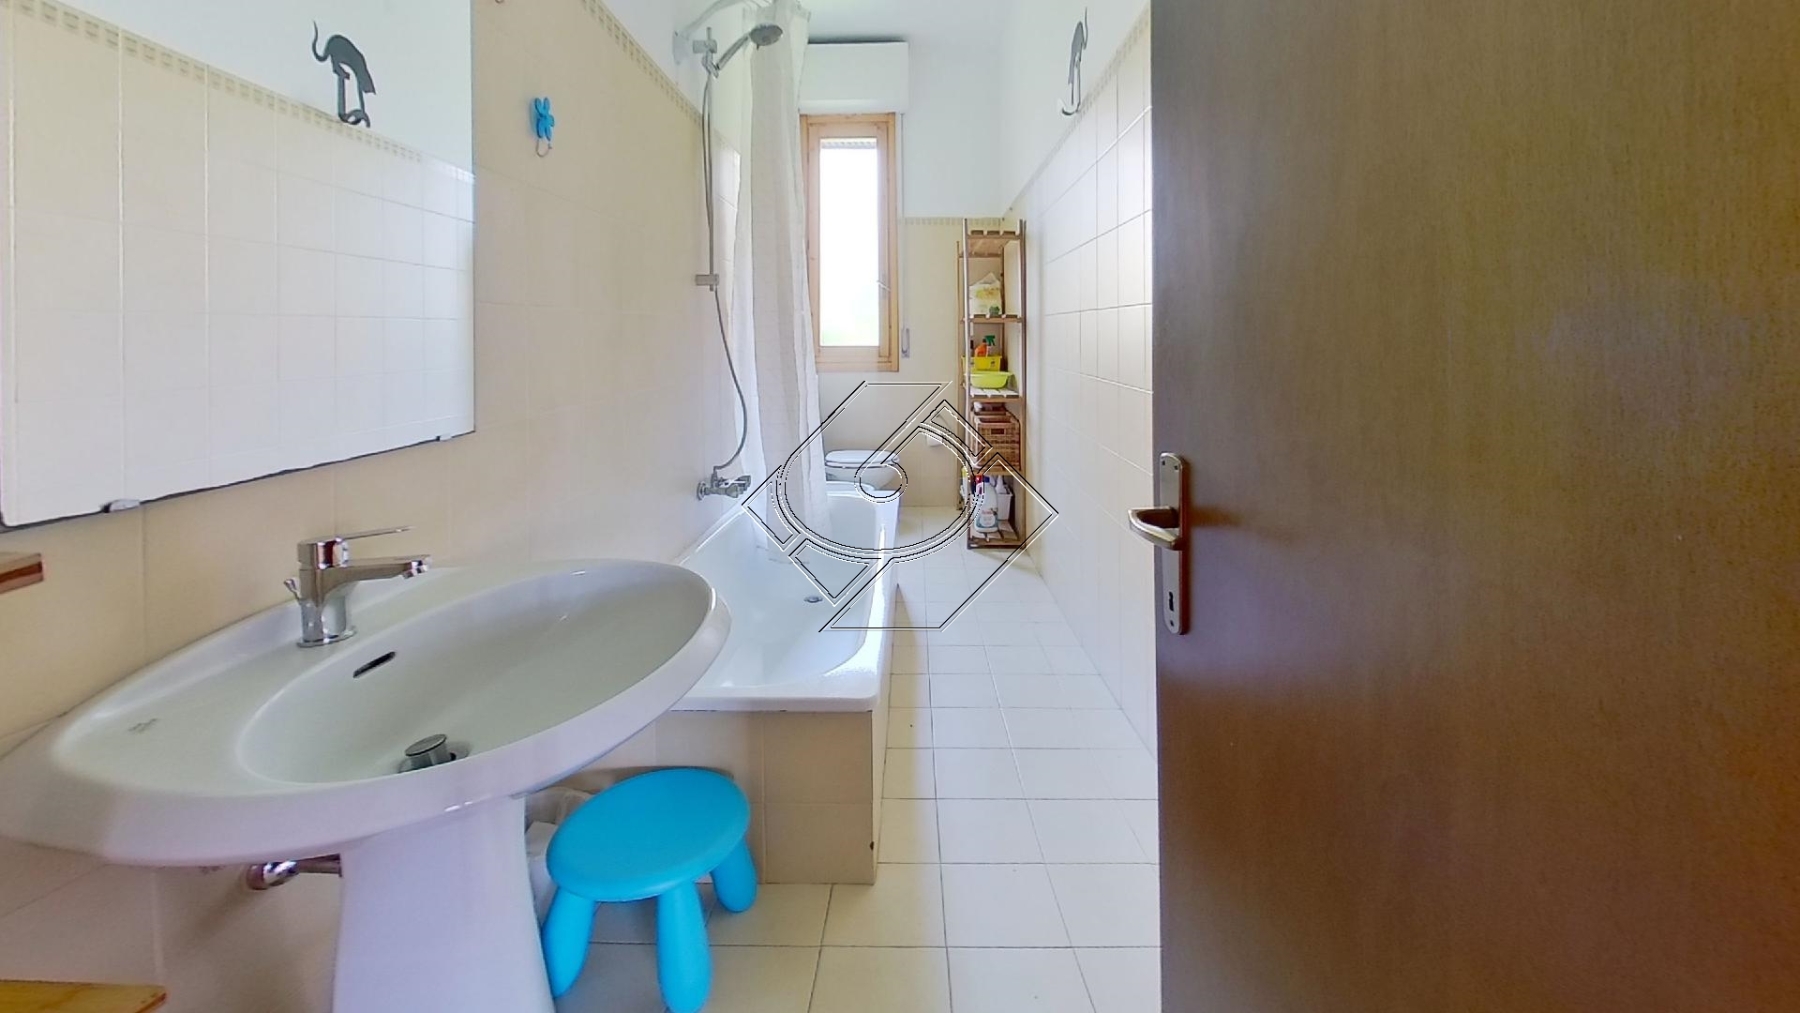 2C-Via-San-Martino-Bathroom